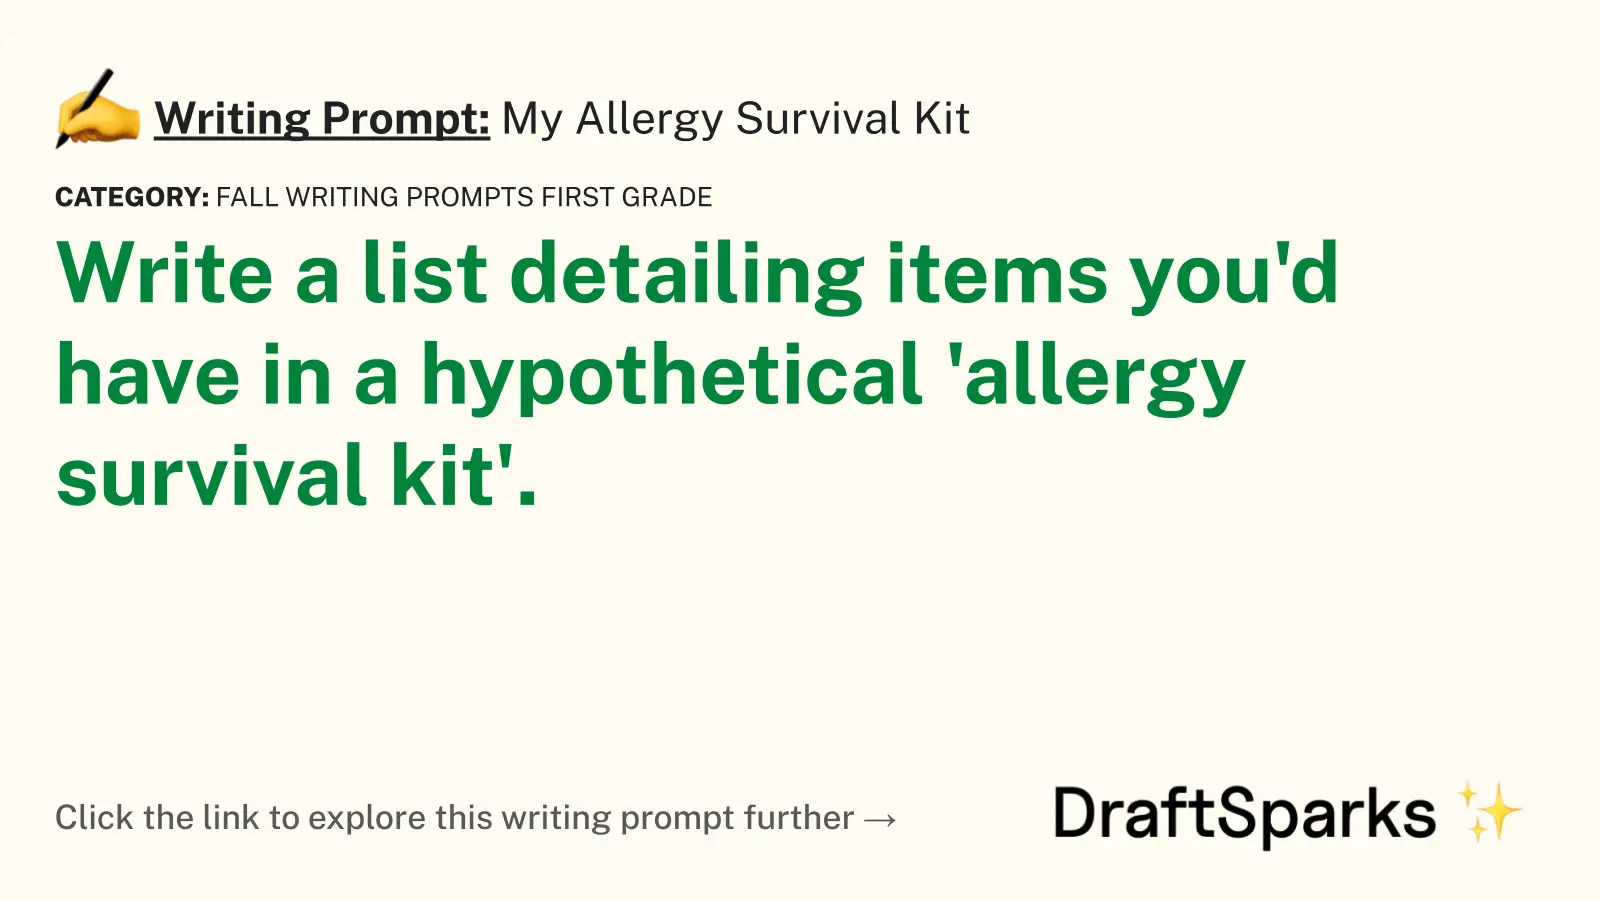 My Allergy Survival Kit